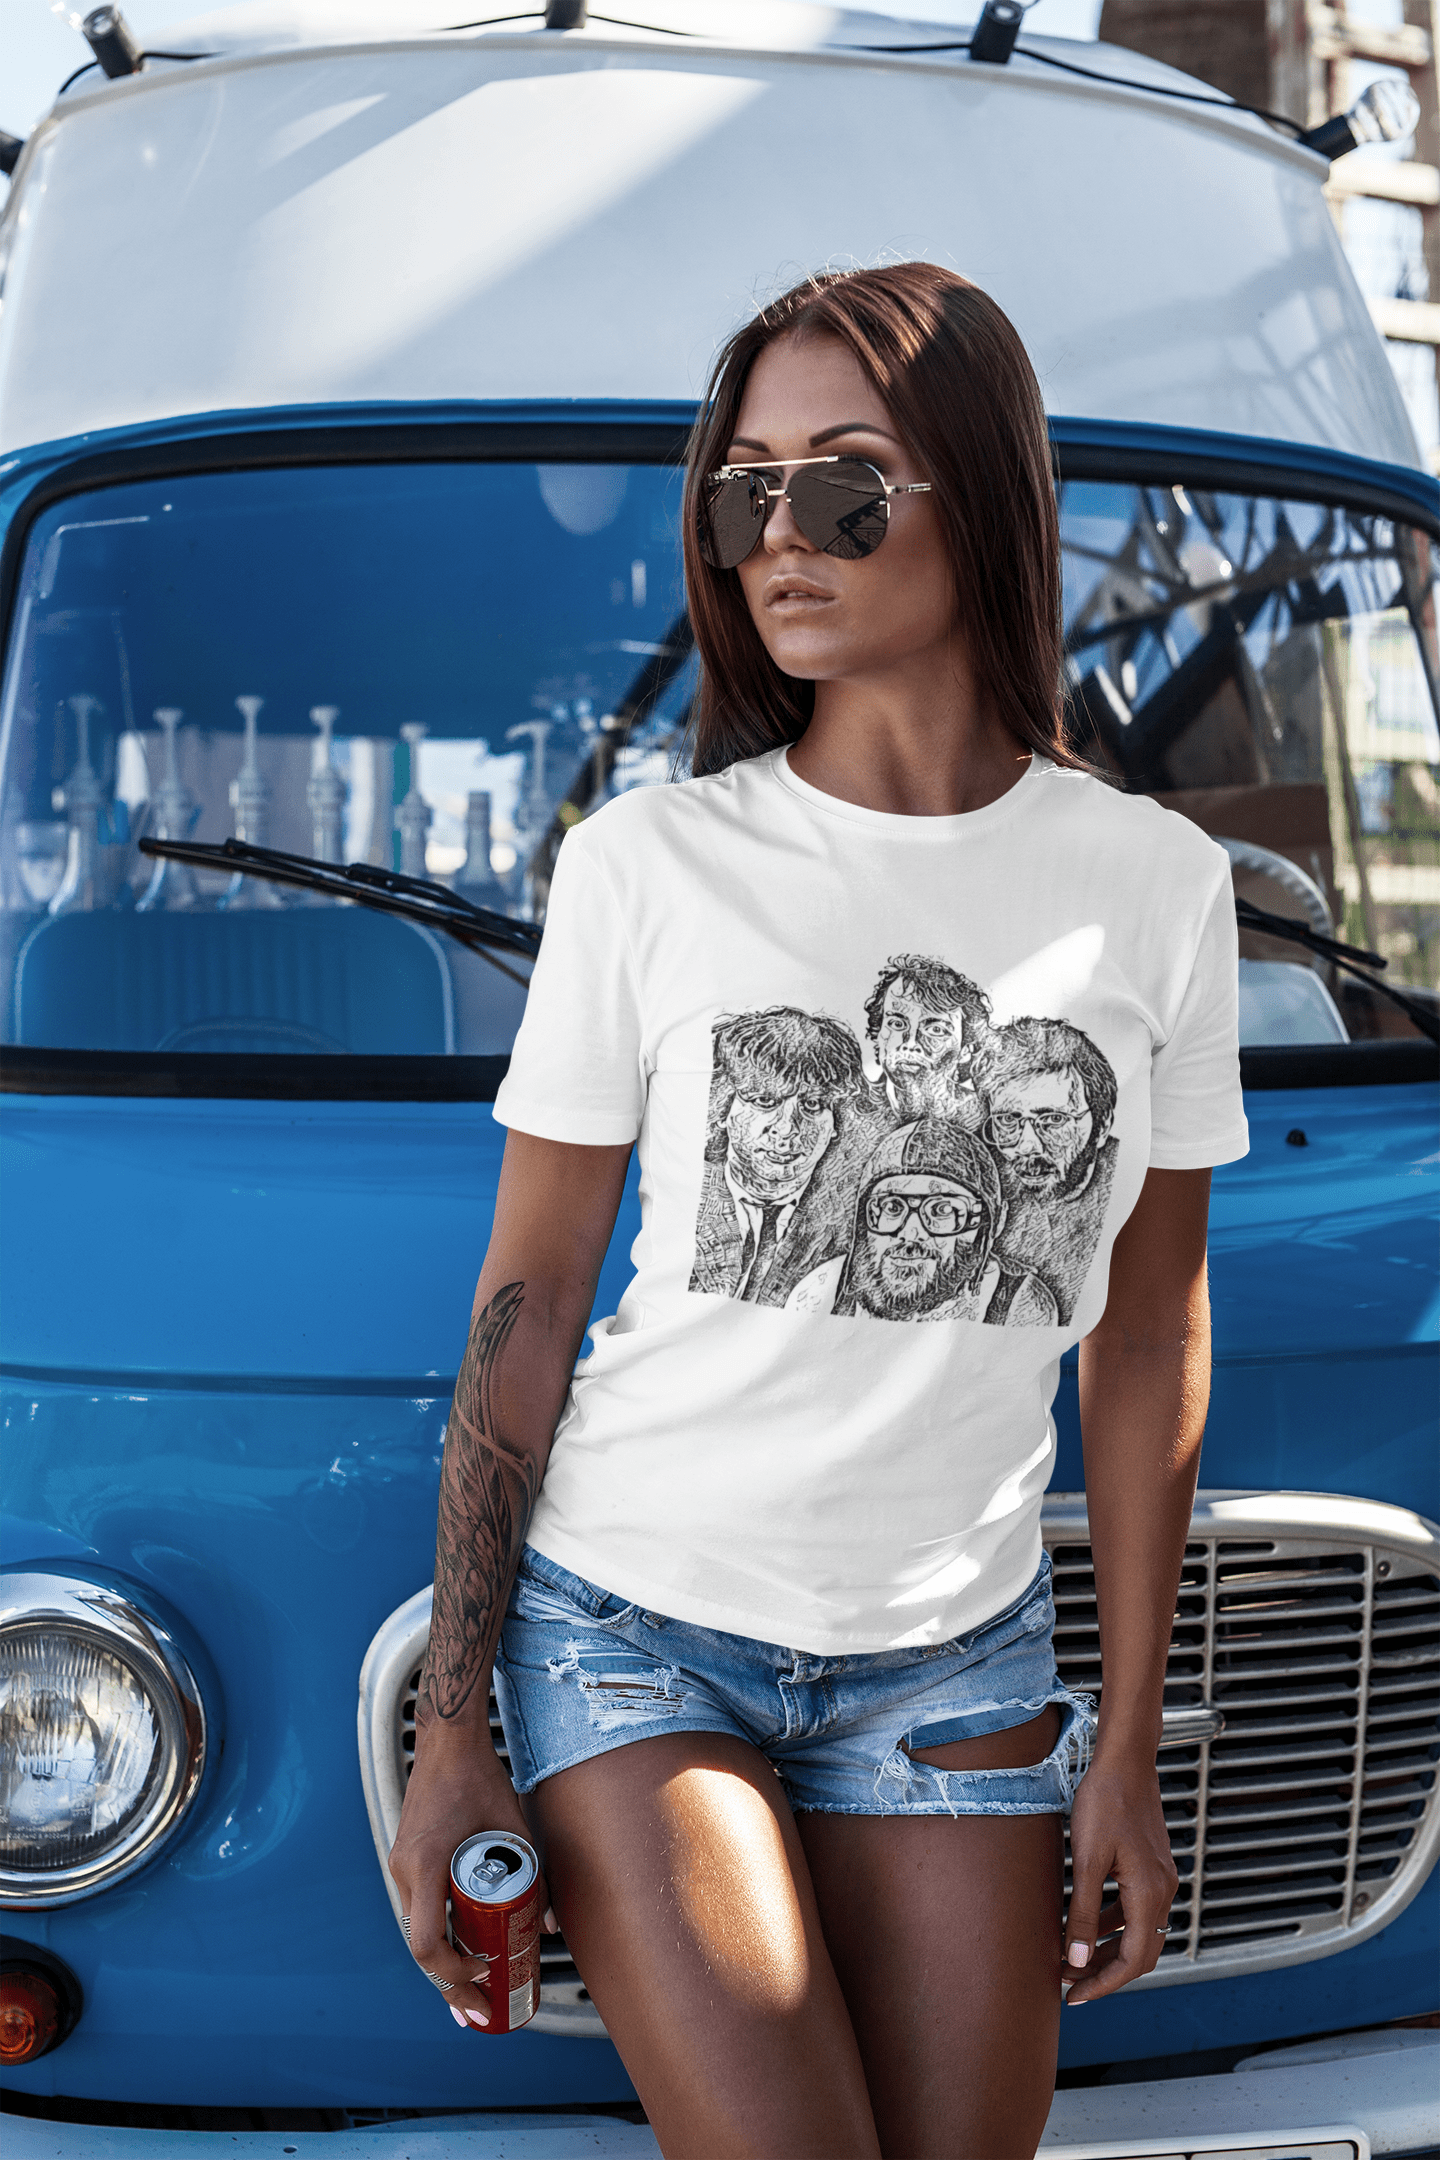 Phish T Shirt / Woodcut Style / Trey / Gift T-Shirts rockviewtees.com